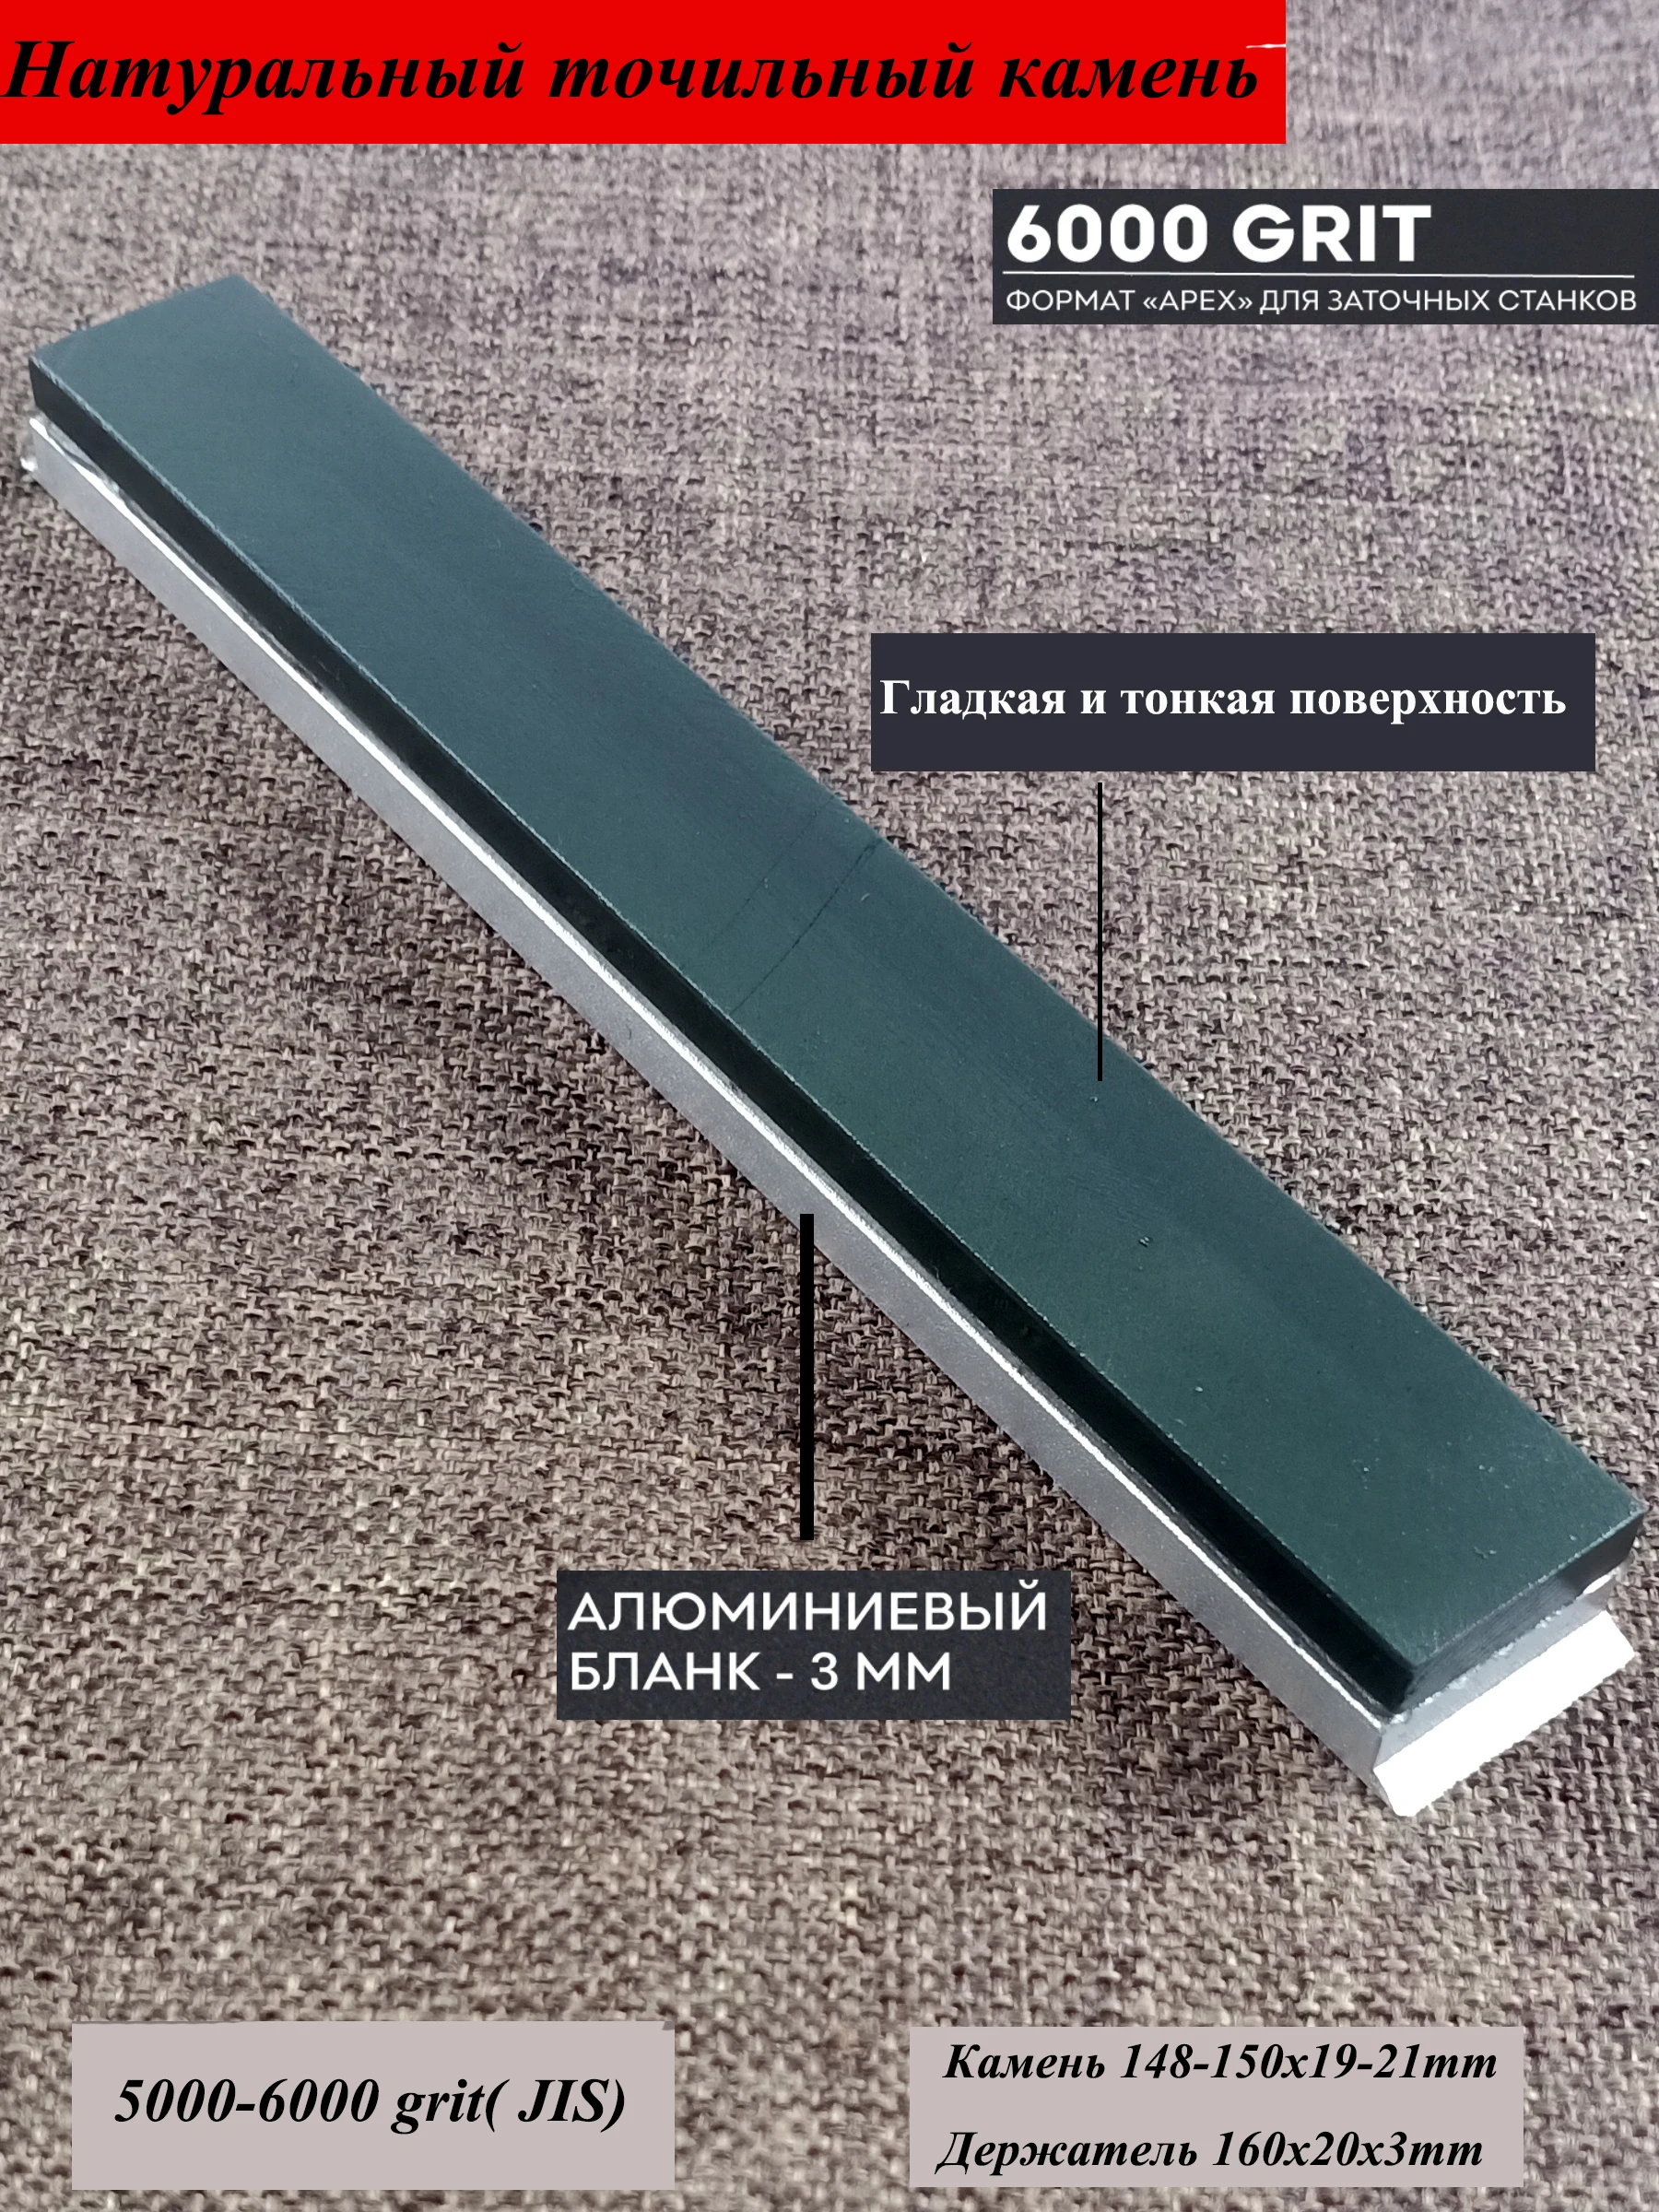 

Knife Sharpening stone natural whetstone 6000 grit 20mm Apex Ruixin pro rx008 aluminum base